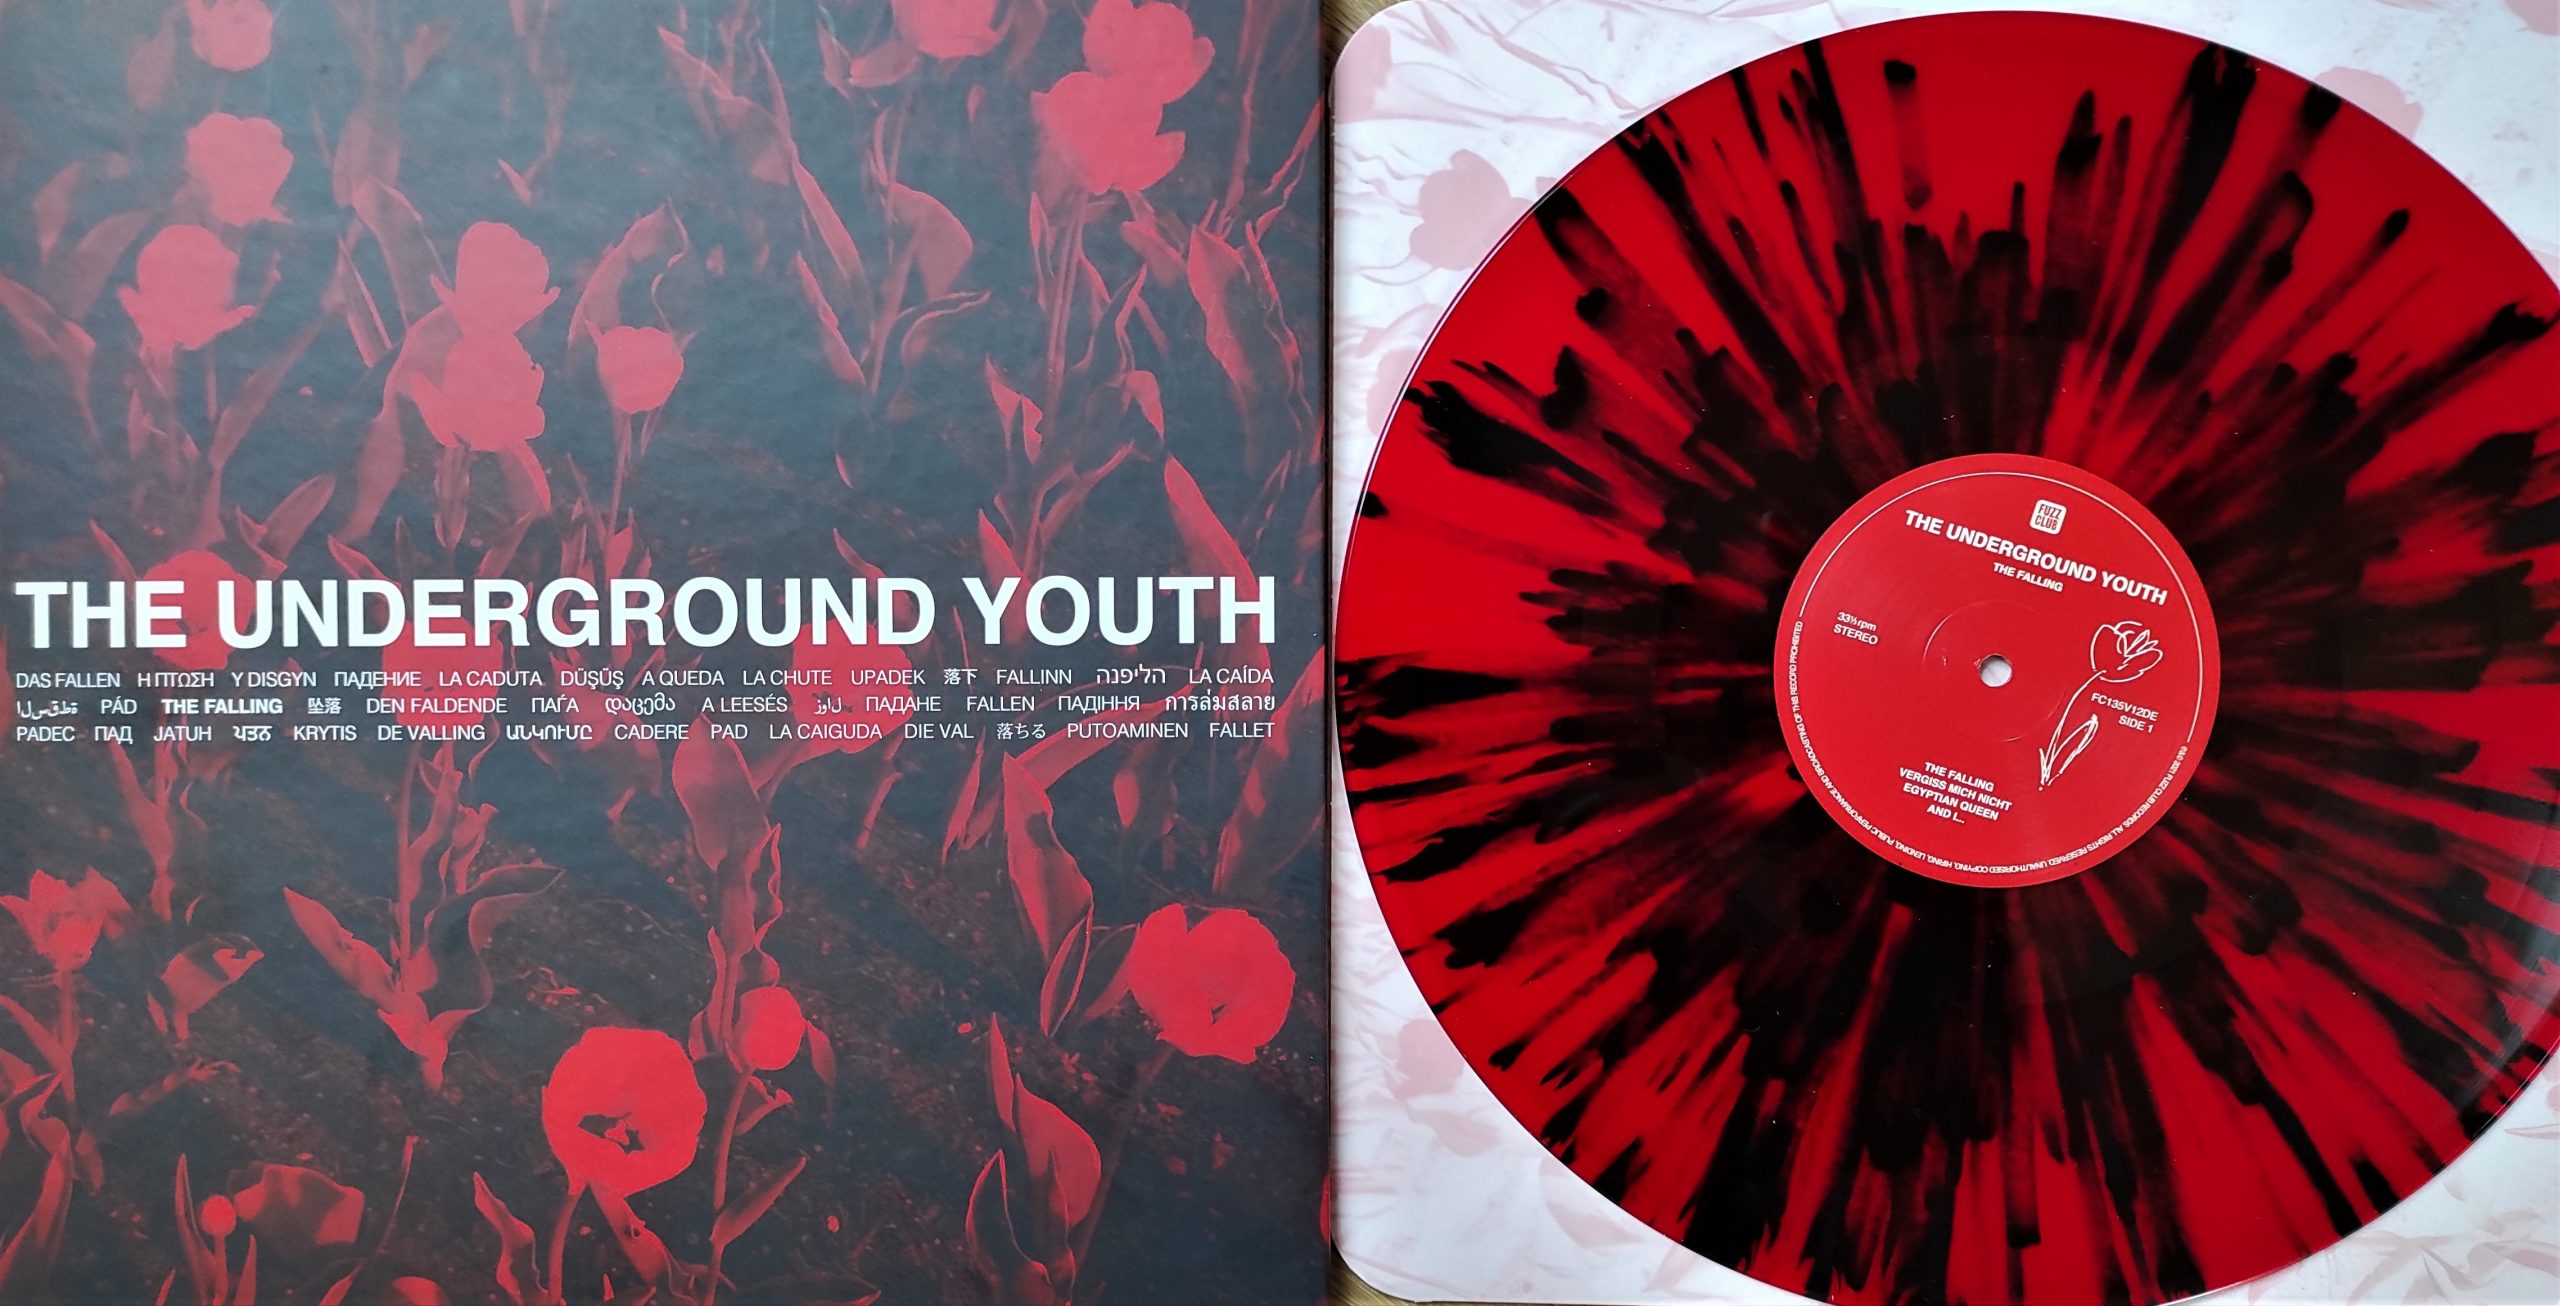 The Underground Youth: The Falling, a dark folk post punk album